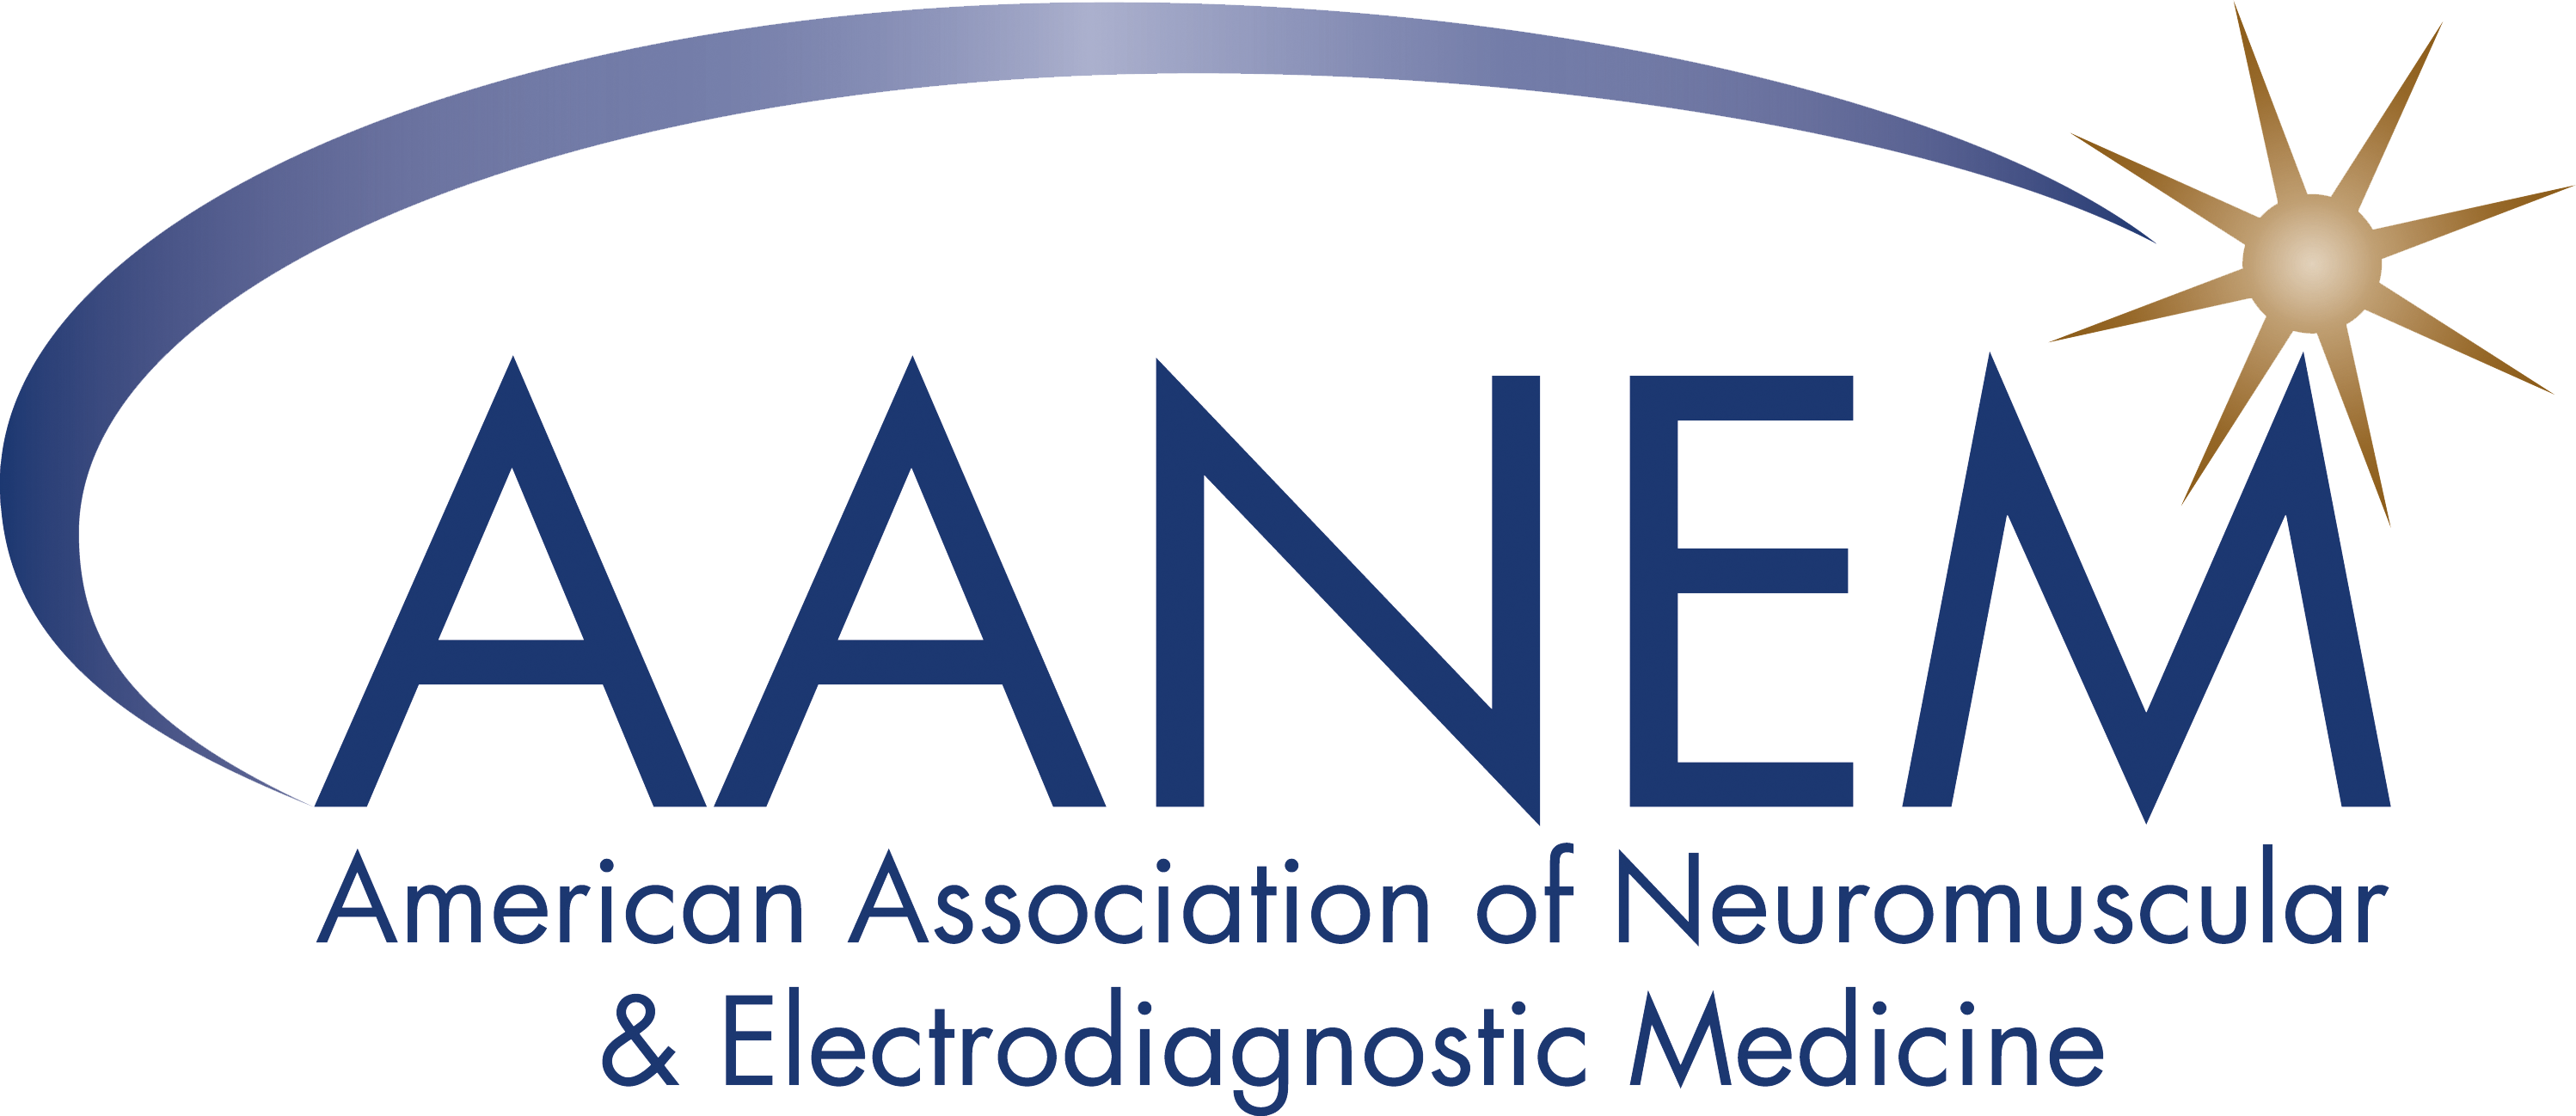 American Association of Neuromuscular & Electrodiagnostic Medicine logo